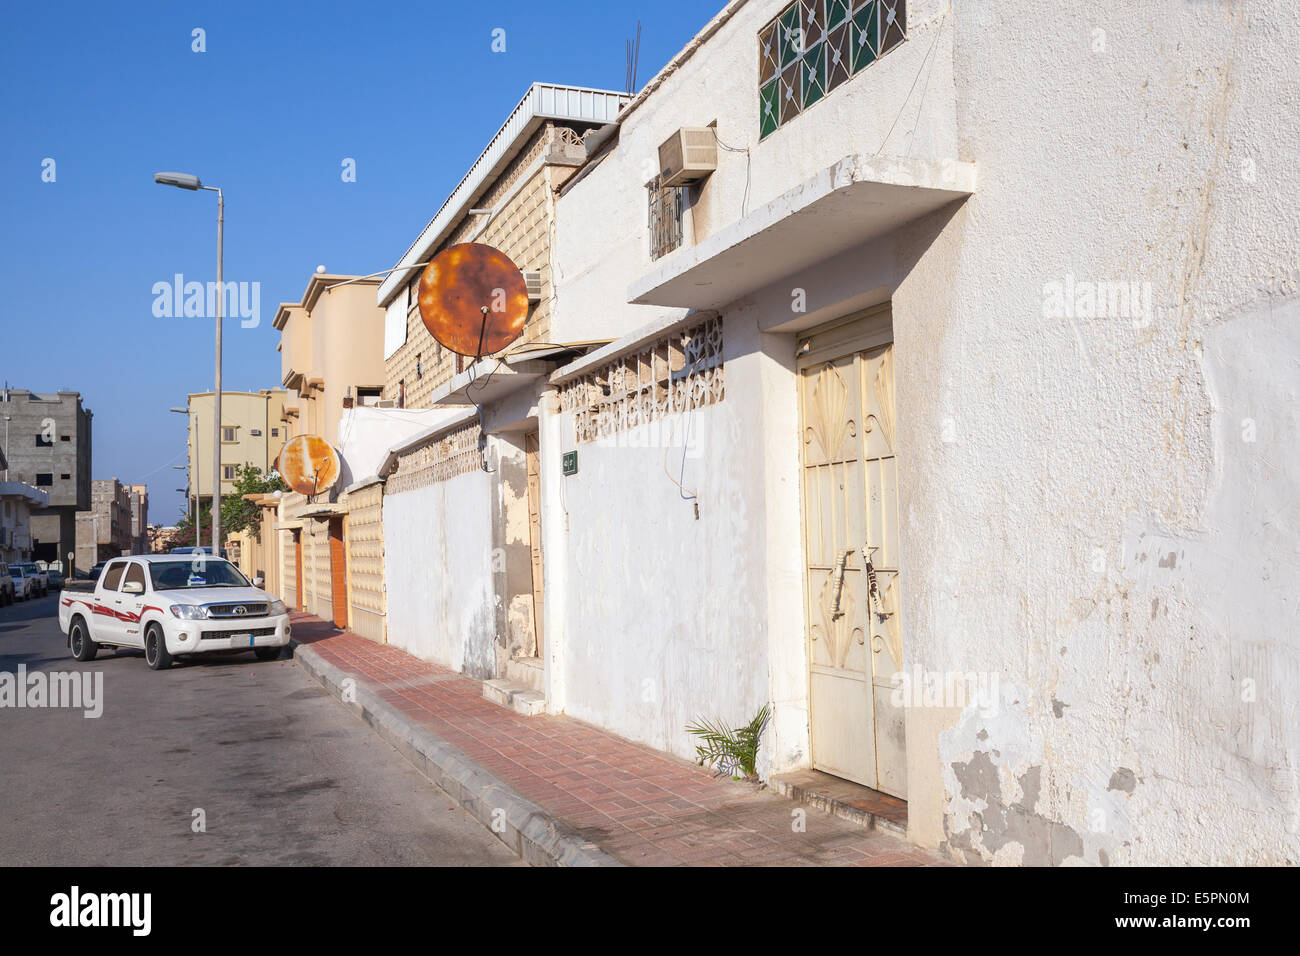 RAHIMA, SAUDI ARABIA - MAY 19, 2014: Ordinary street view with parked car and white walls, Saudi Arabia Stock Photo